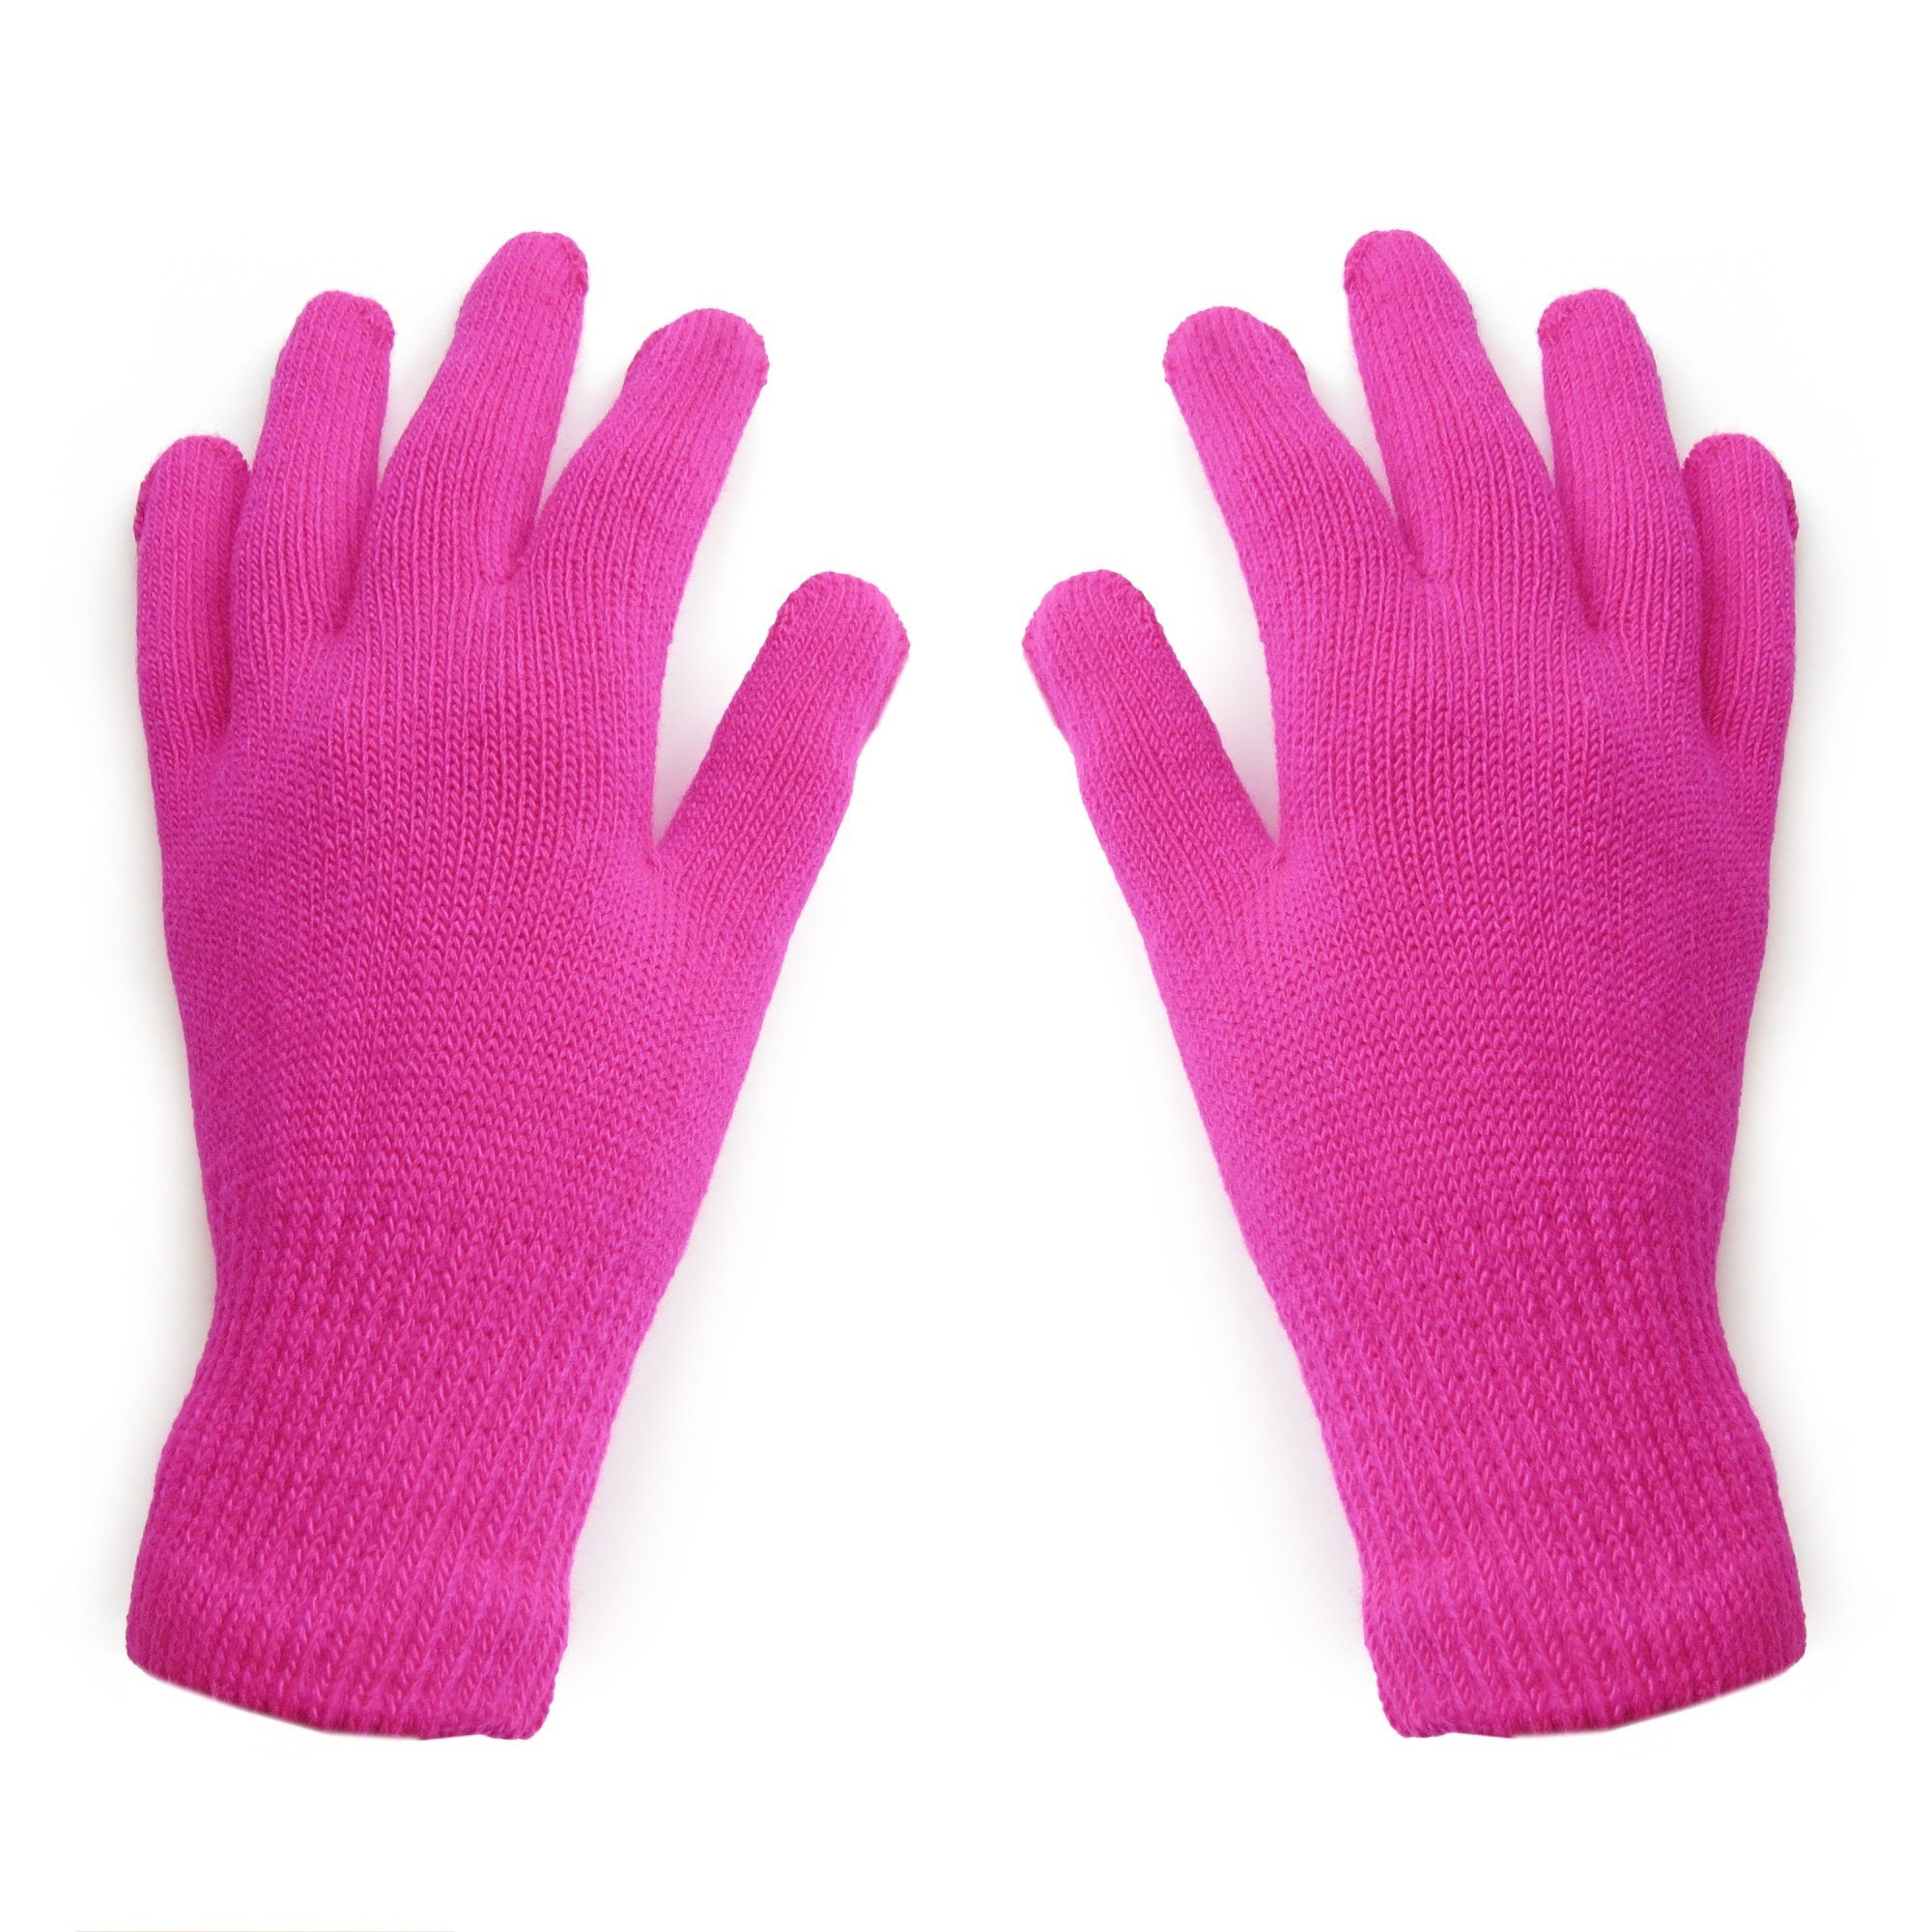 Sonia Originelli Strickhandschuhe Strickhandschuhe Neon bunt knallig ungefüttert dehnbar unisex Ungefüttert, Onesize pink | Strickhandschuhe